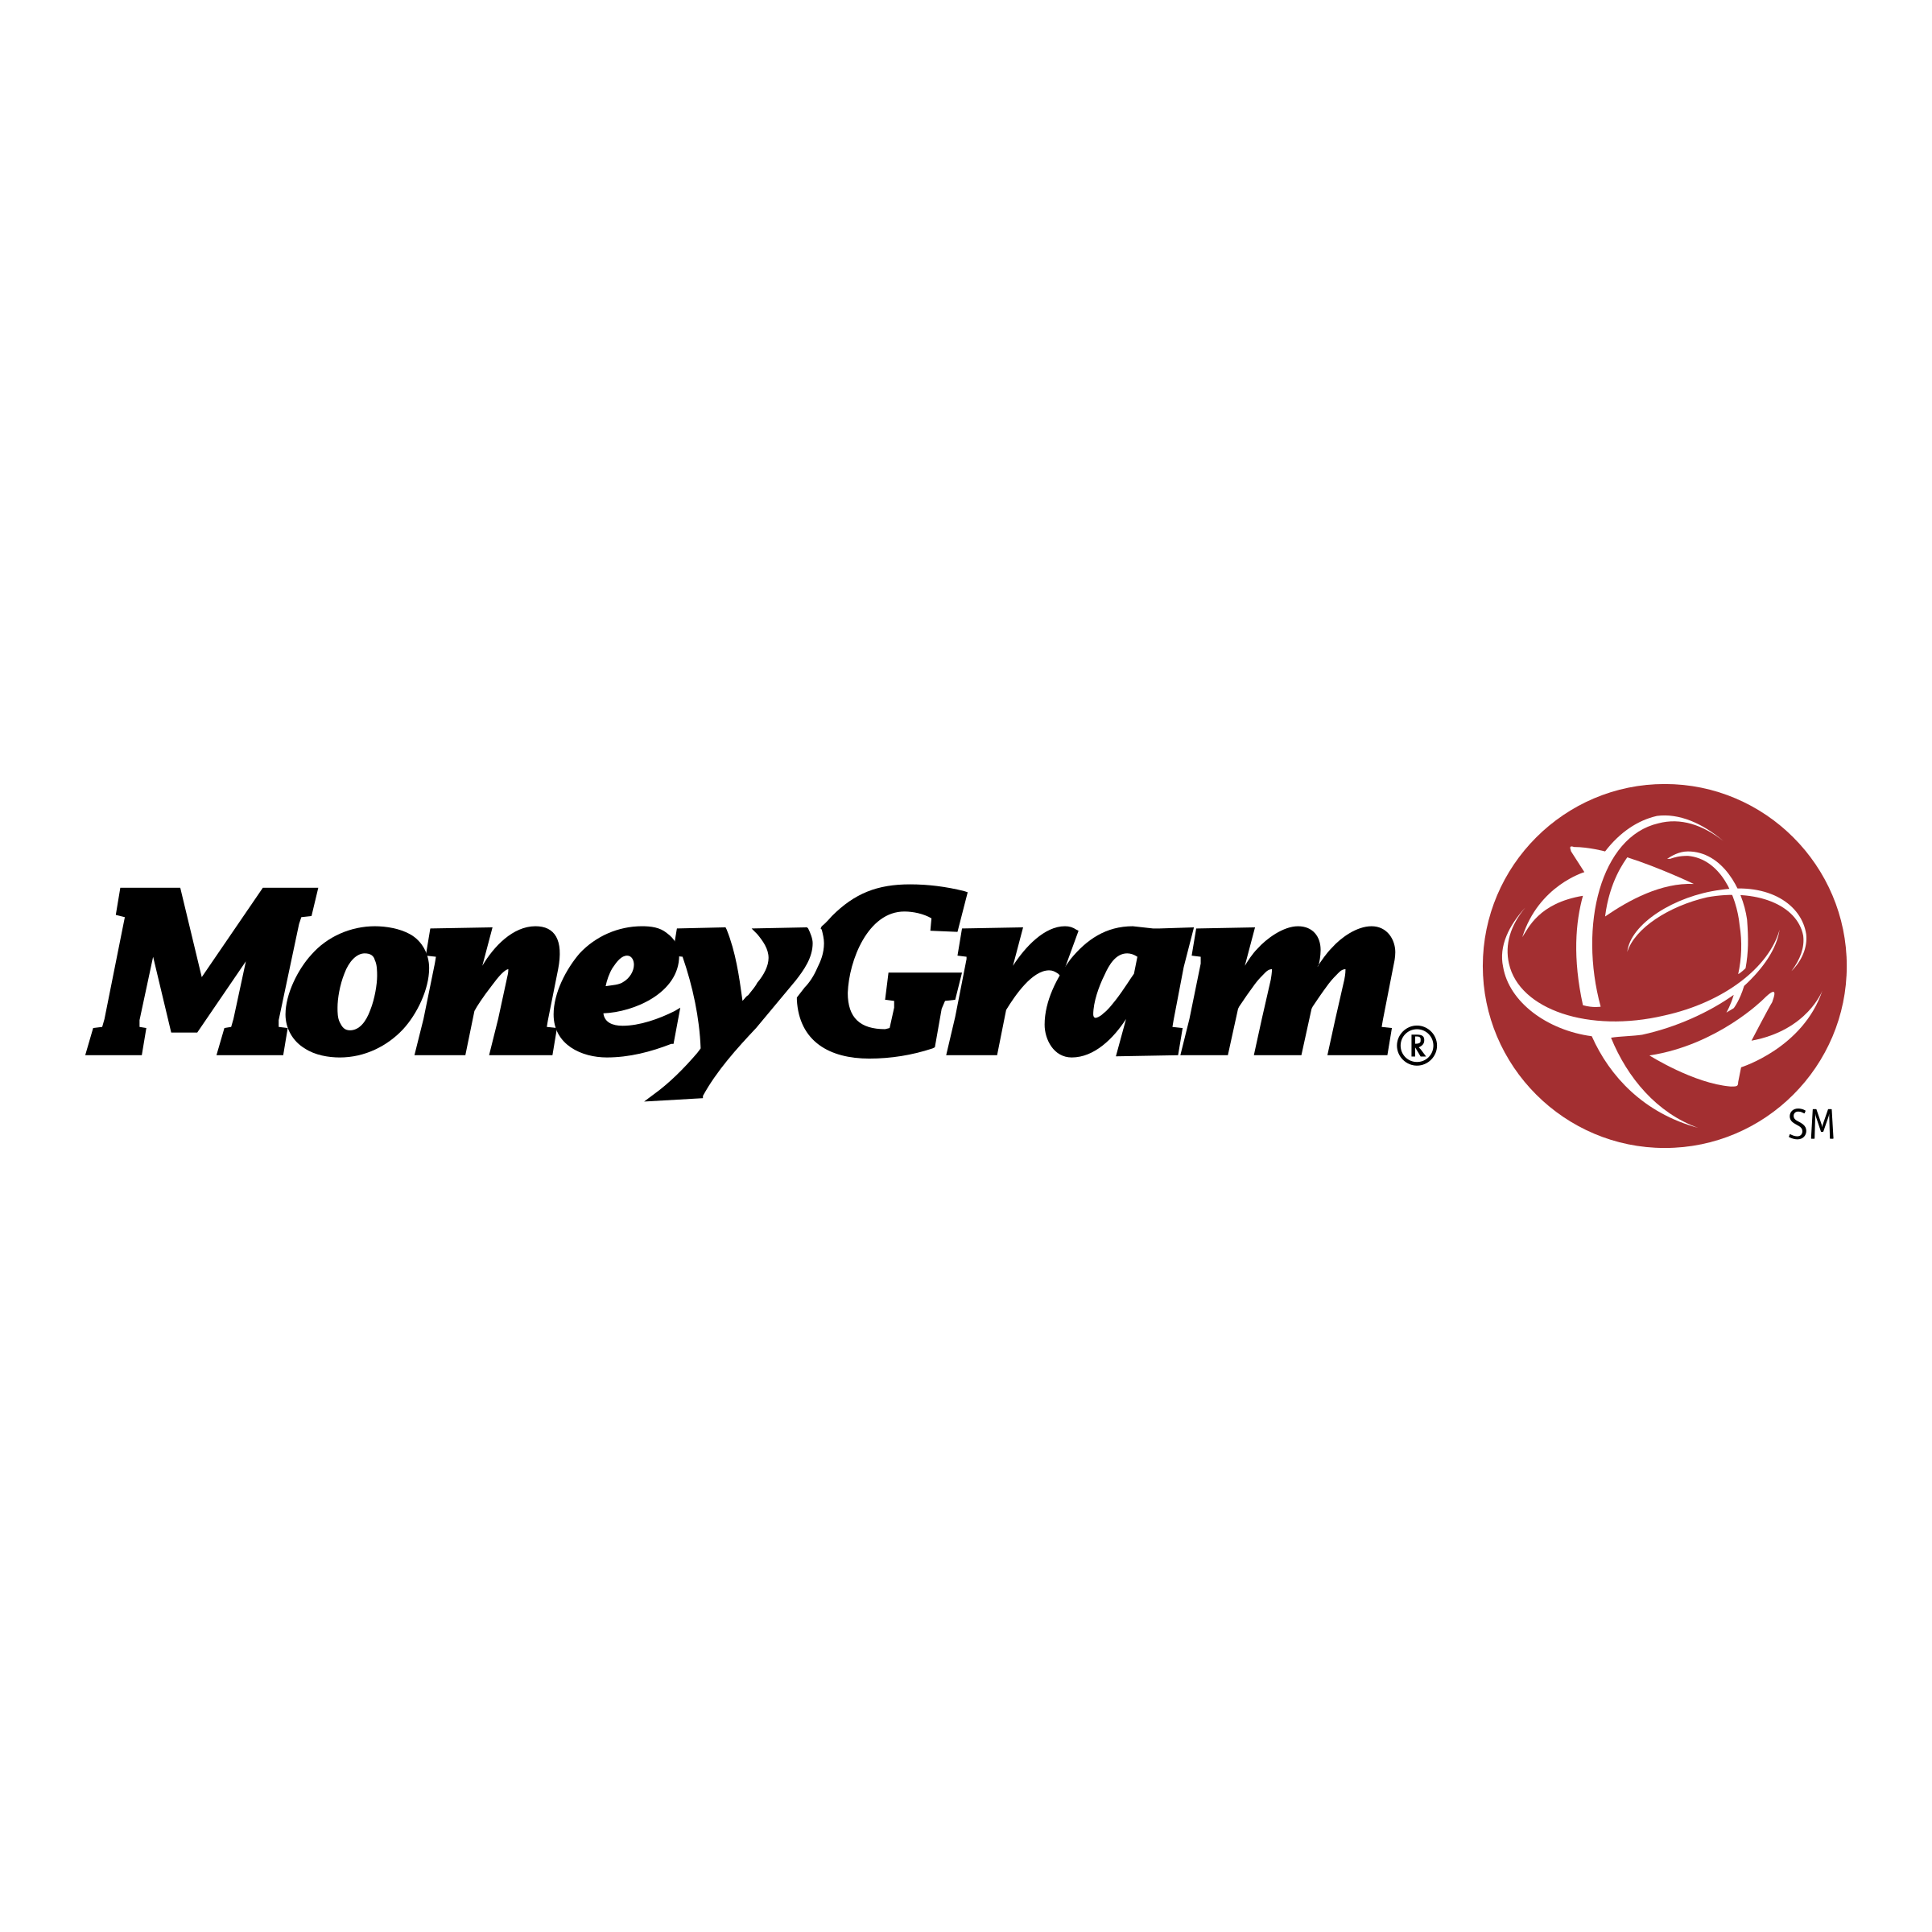 MoneyGram Logo - MoneyGram Logo PNG Transparent & SVG Vector - Freebie Supply